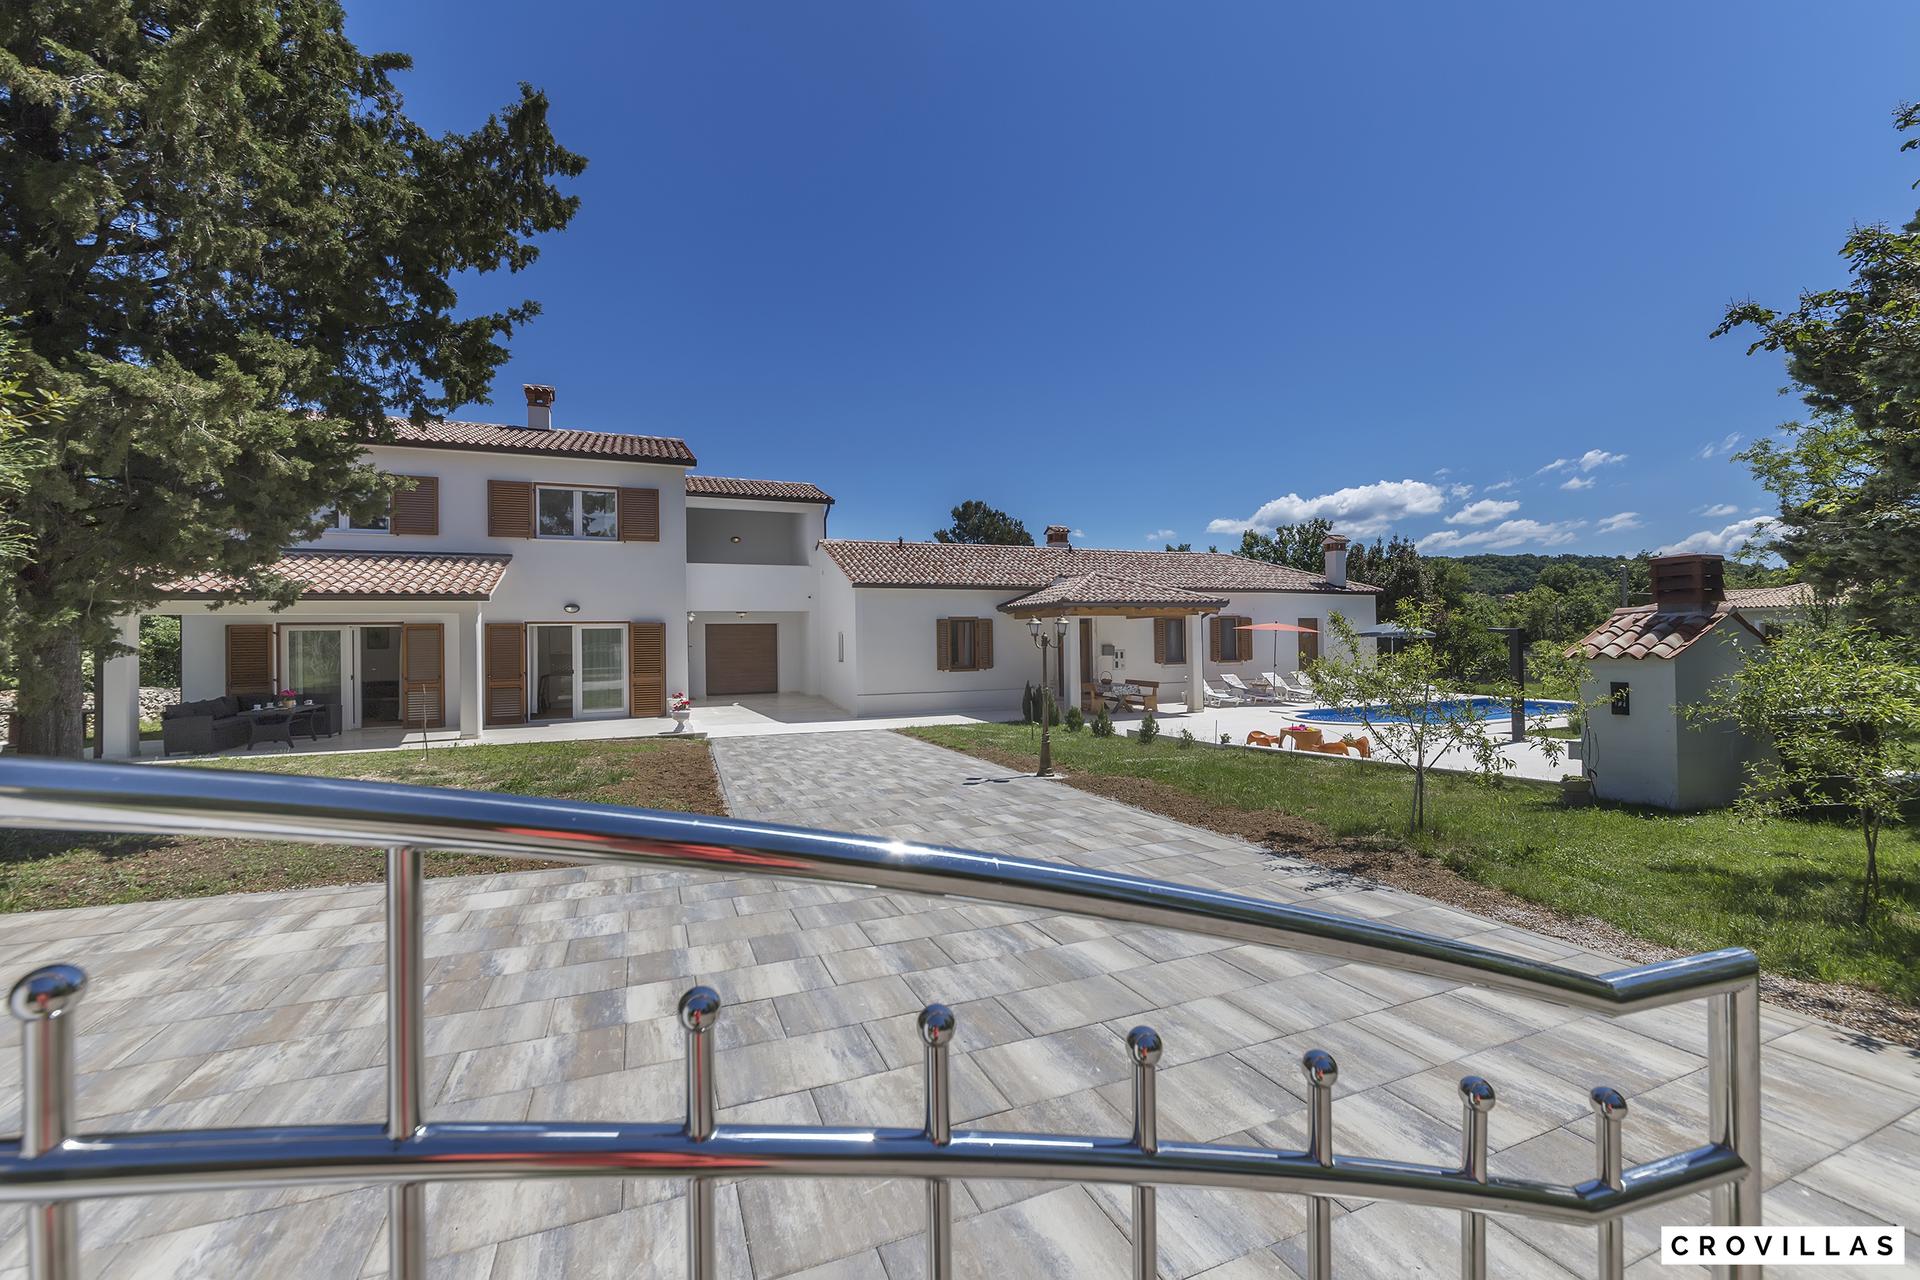 Villa Ana Labin: Highlights